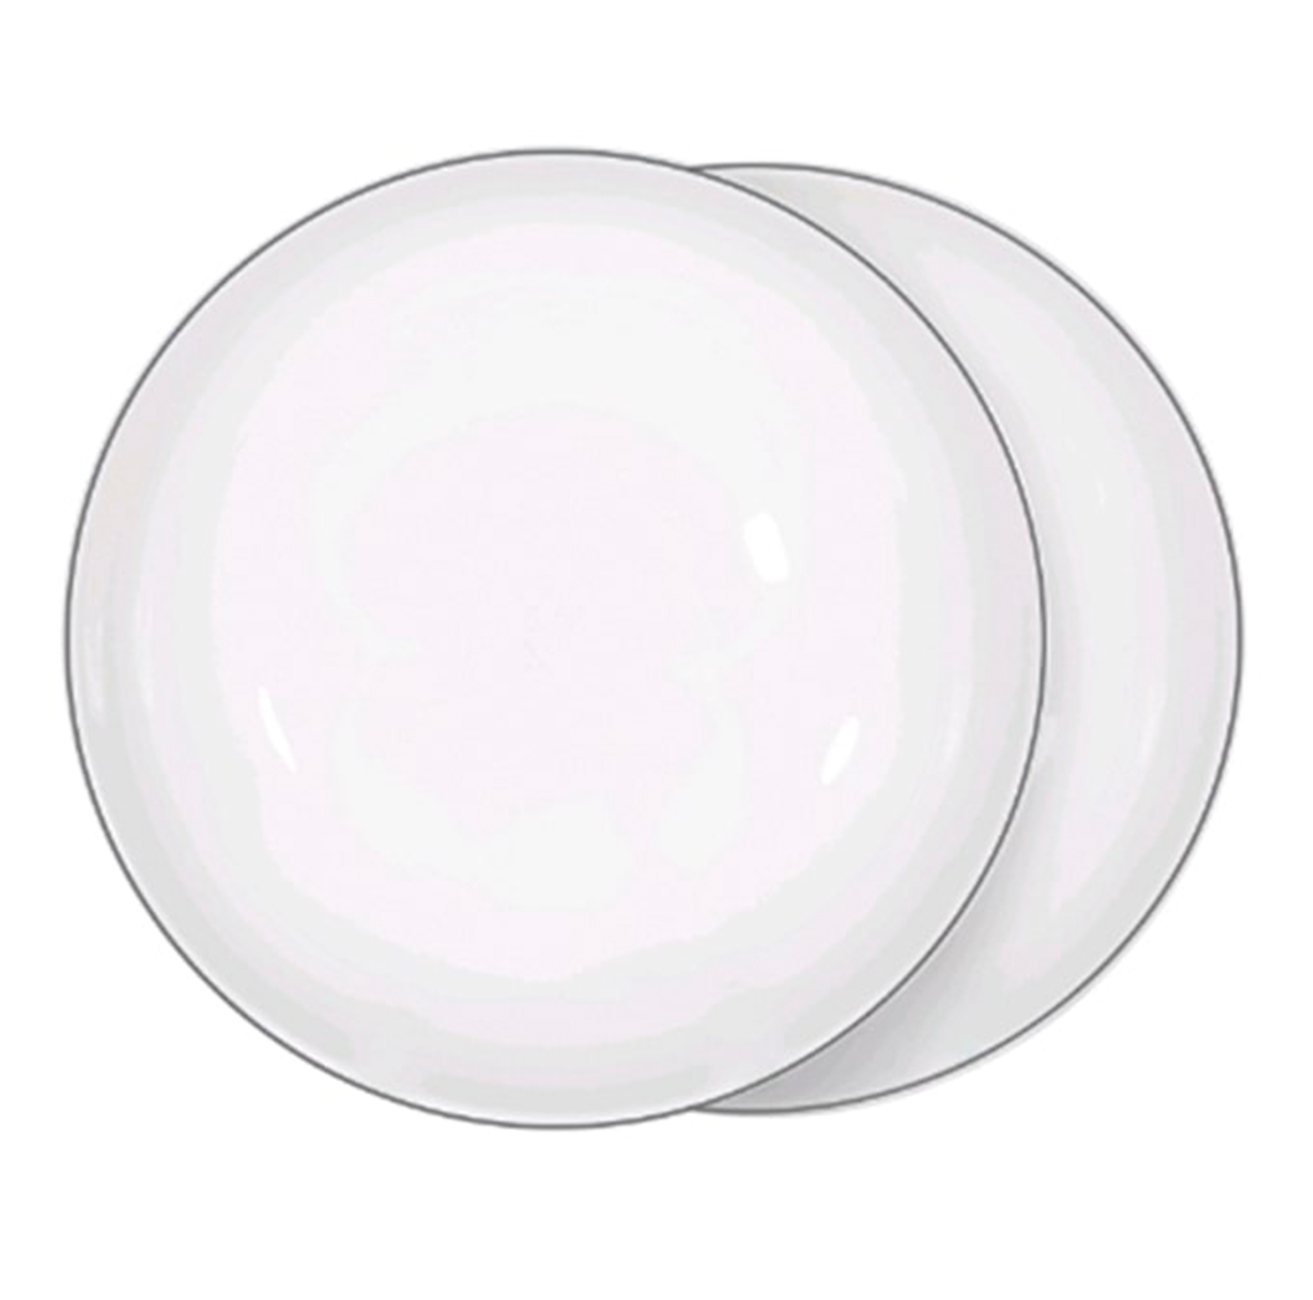 Dining set, 6 pers, 18 pr, porcelain F, white, Ideal silver изображение № 5